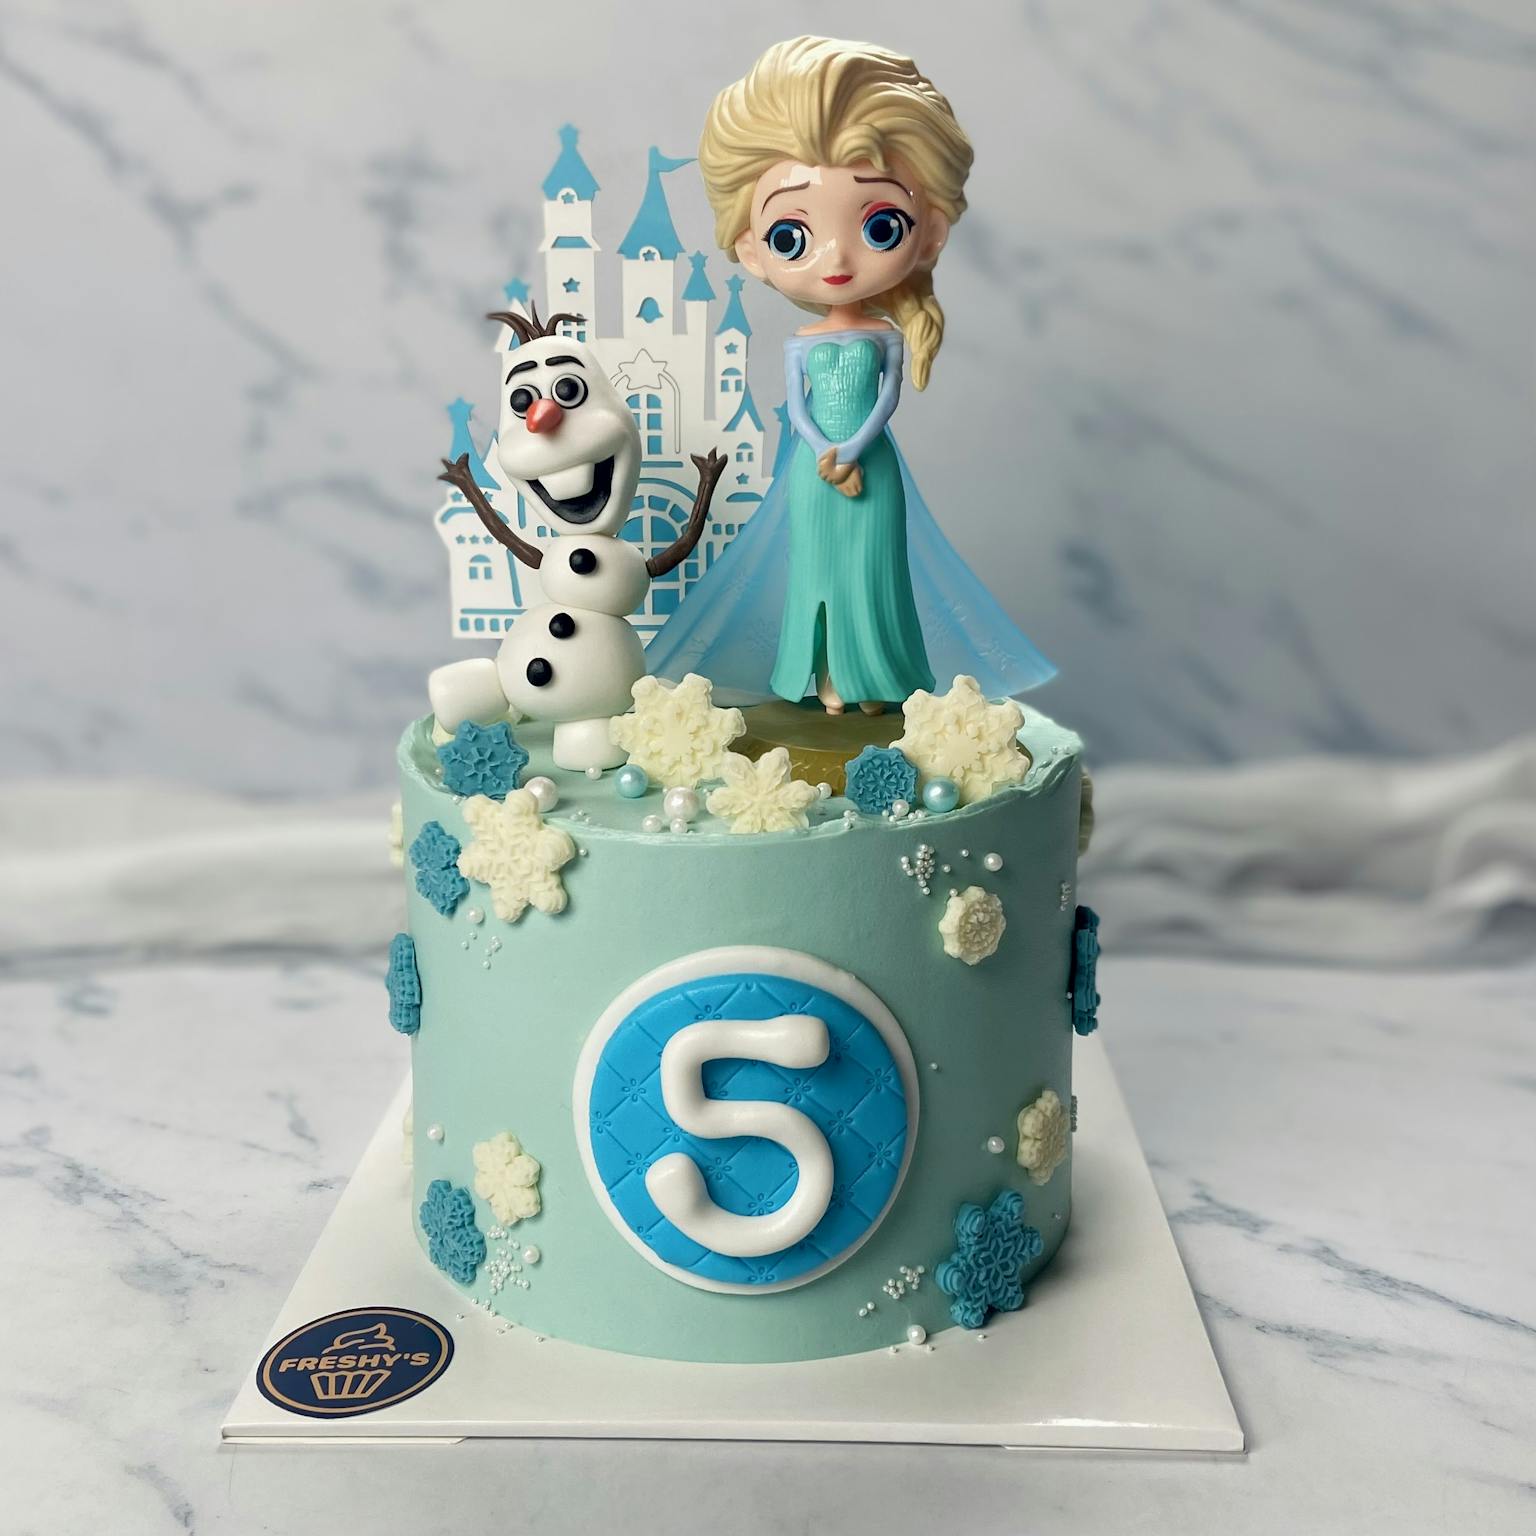 100% edible fondant sculpted Elsa Frozen theme cake